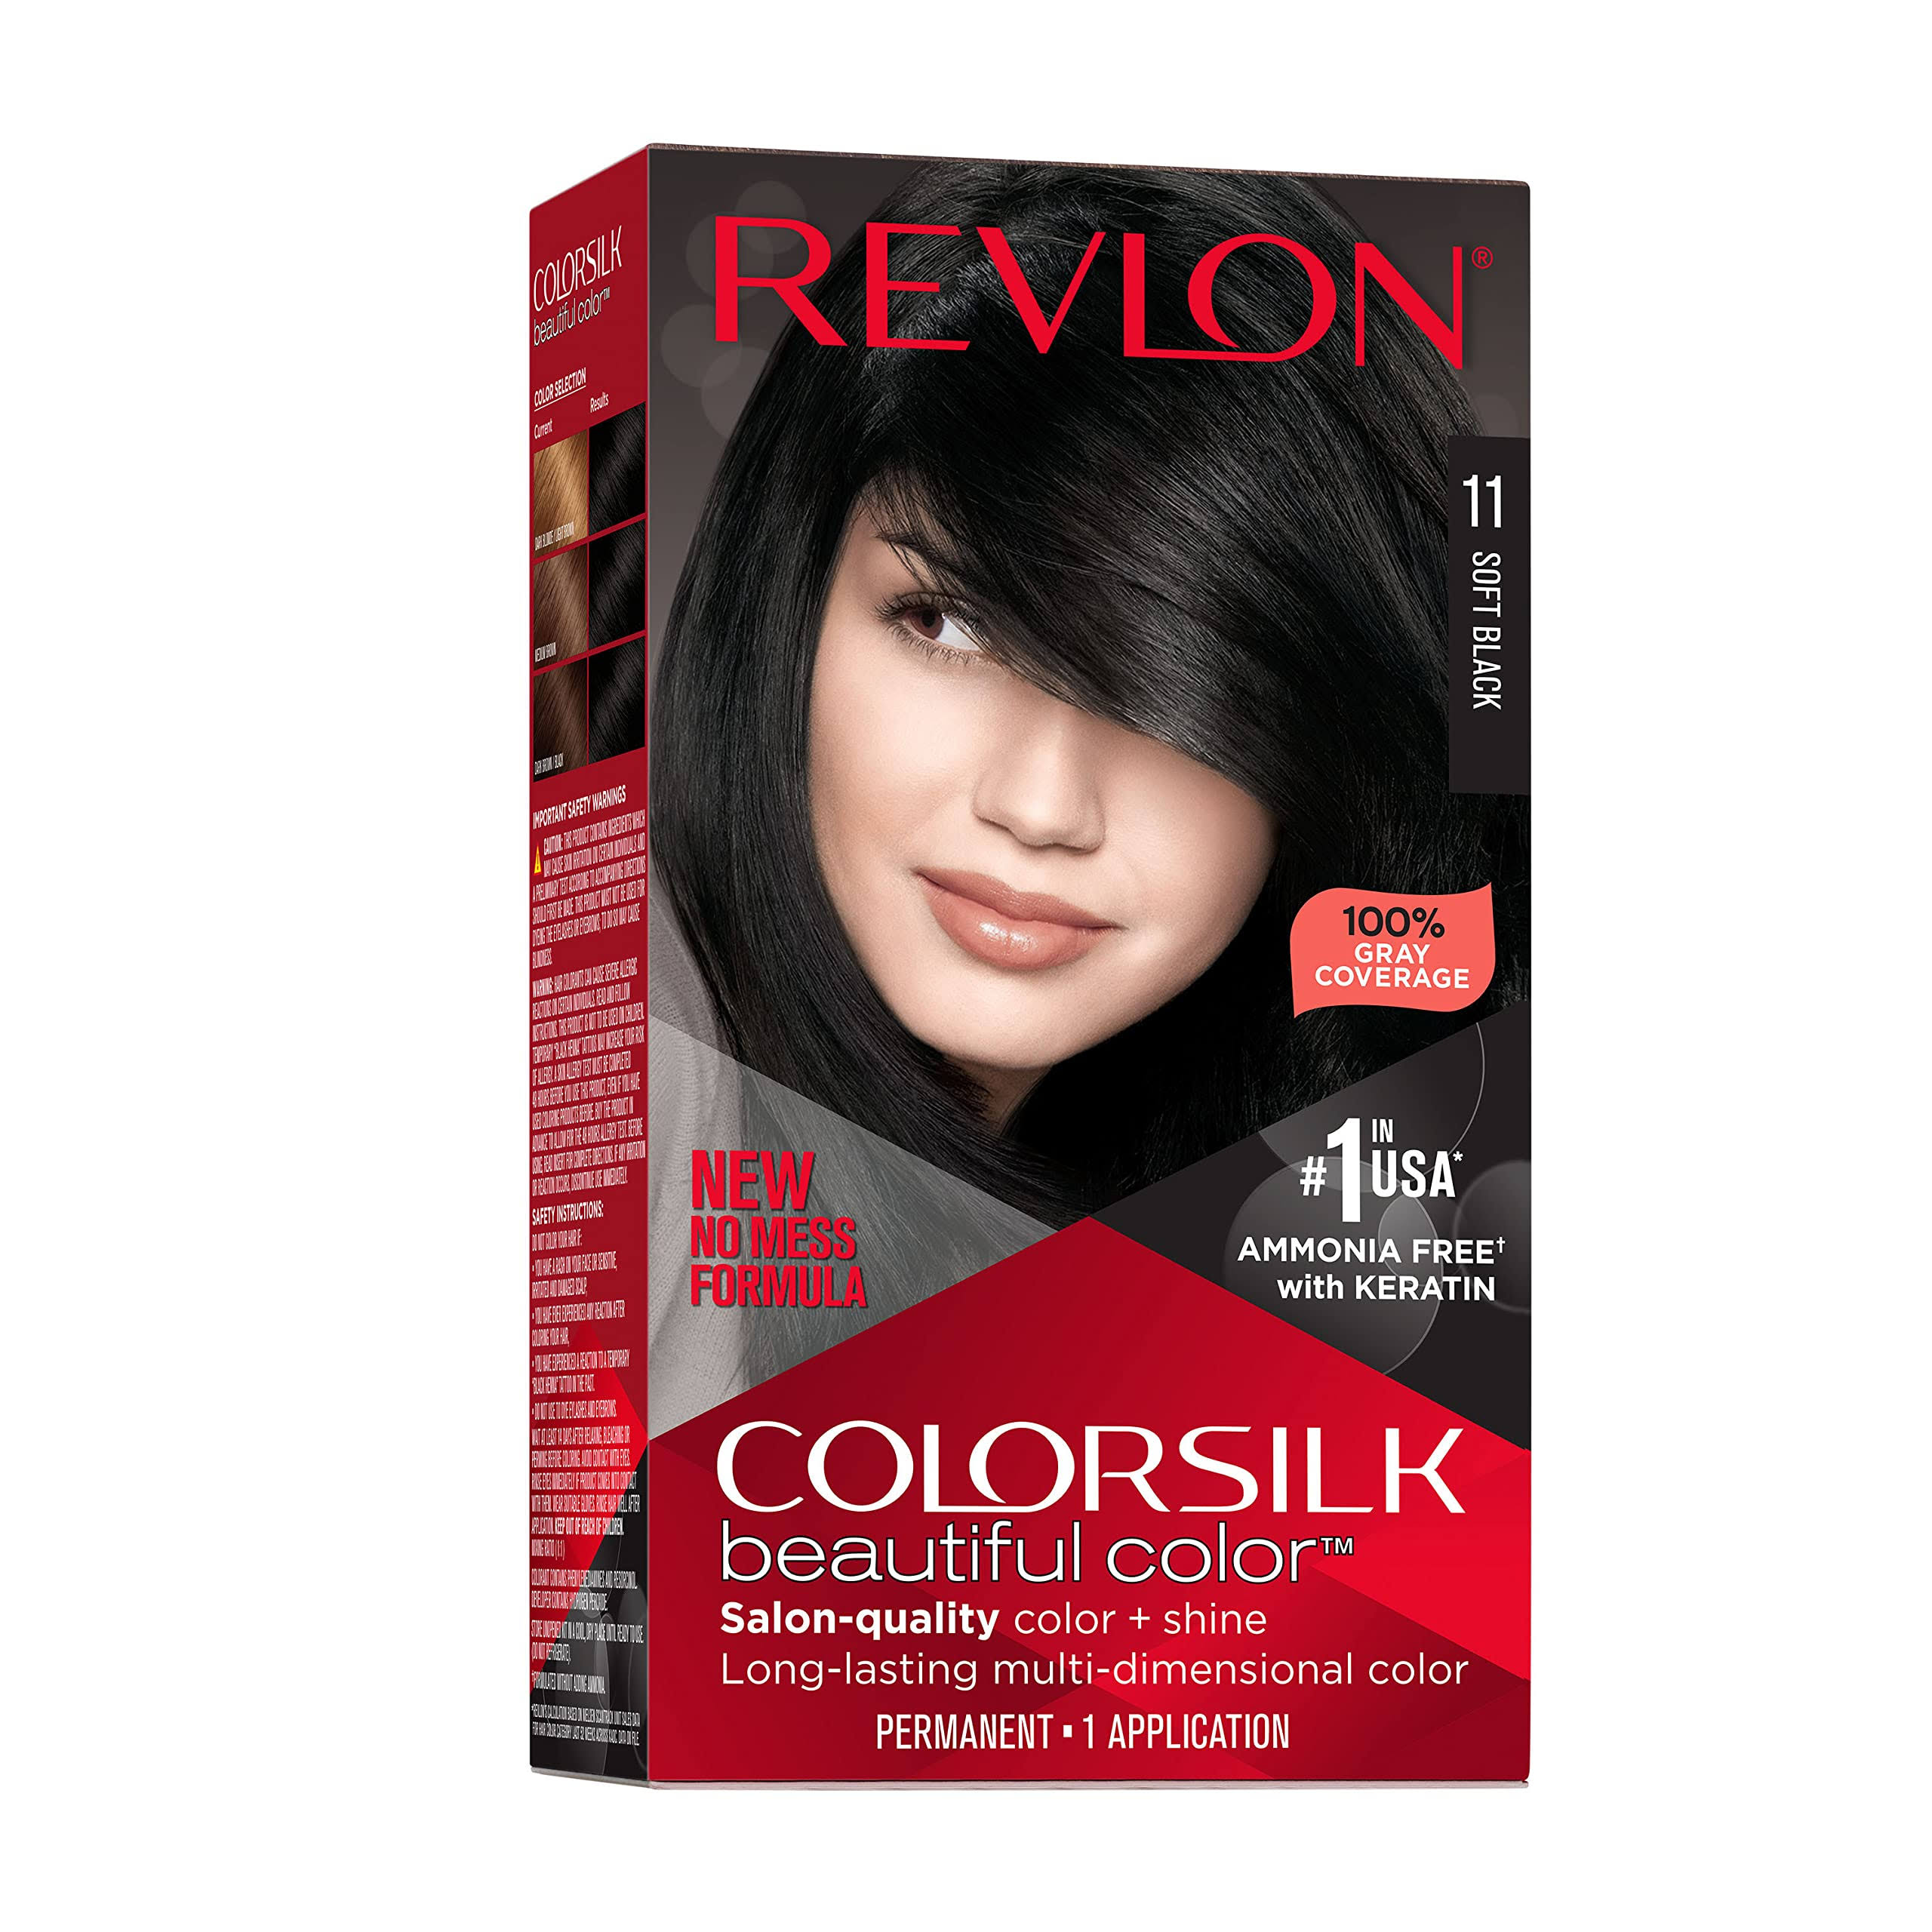 Revlon New ColorSilk Beautiful Permanent Hair Color, No Mess Formula, 11 Soft Black, 1 Pack